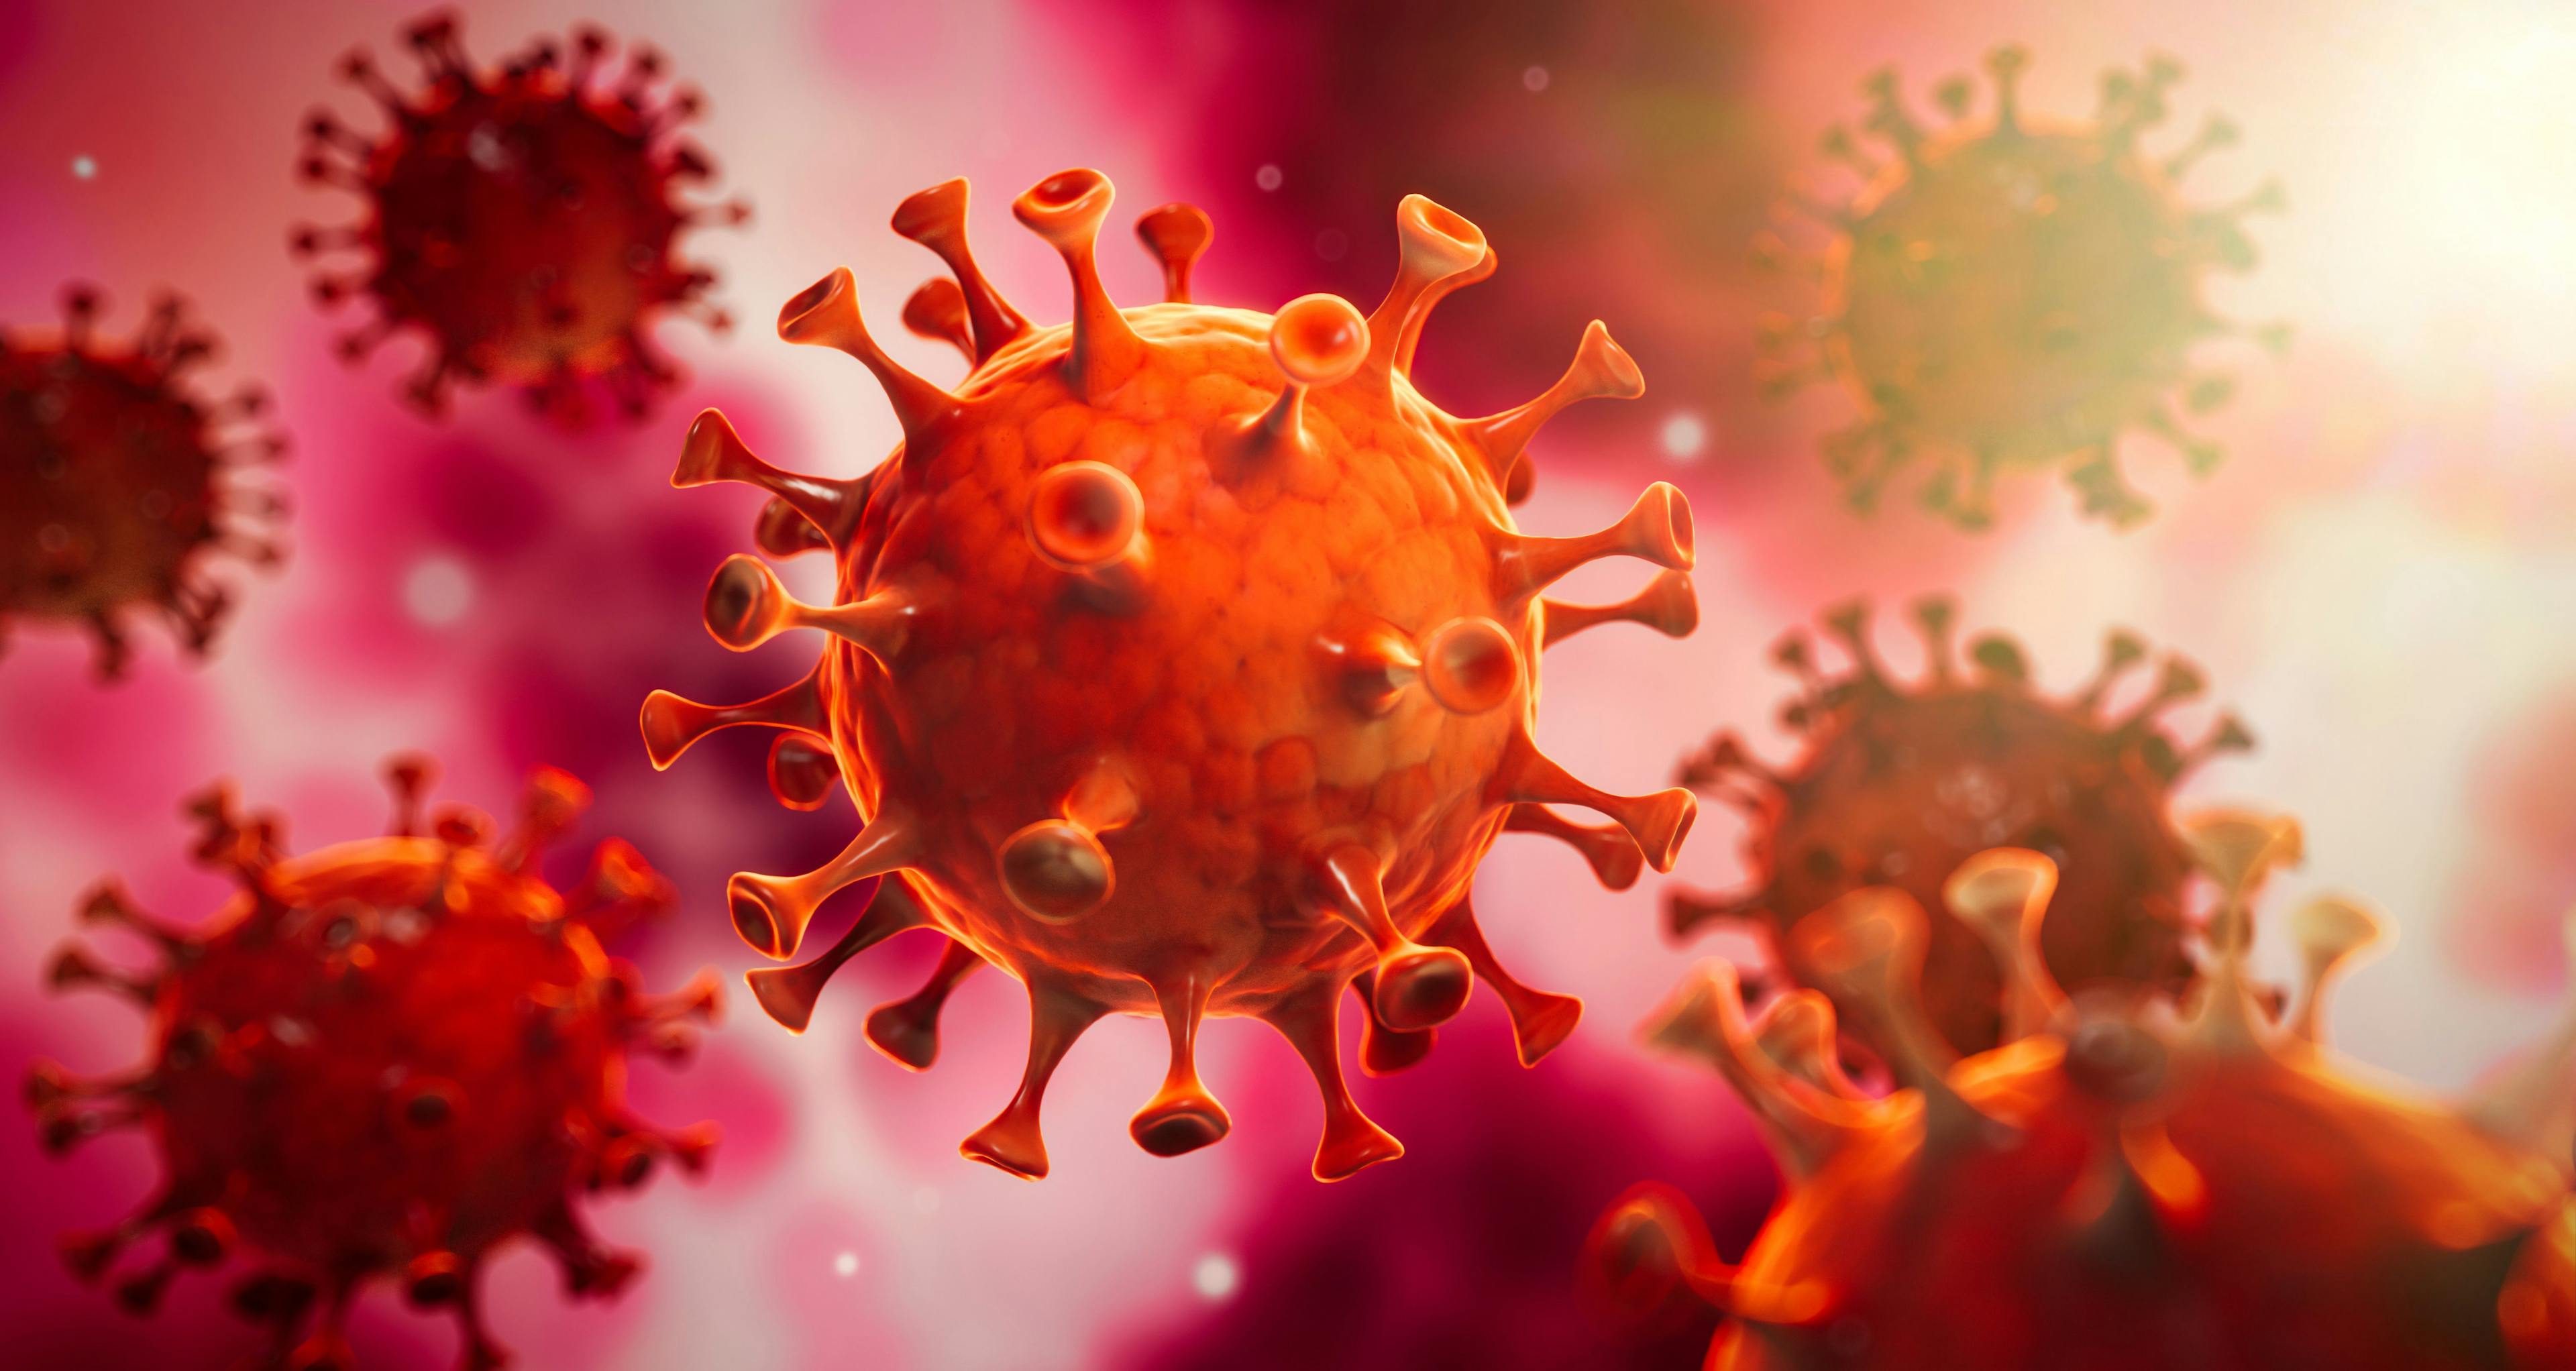 Coronavirus illustration | Image Credit: peterschreiber.media - stock.adobe.com